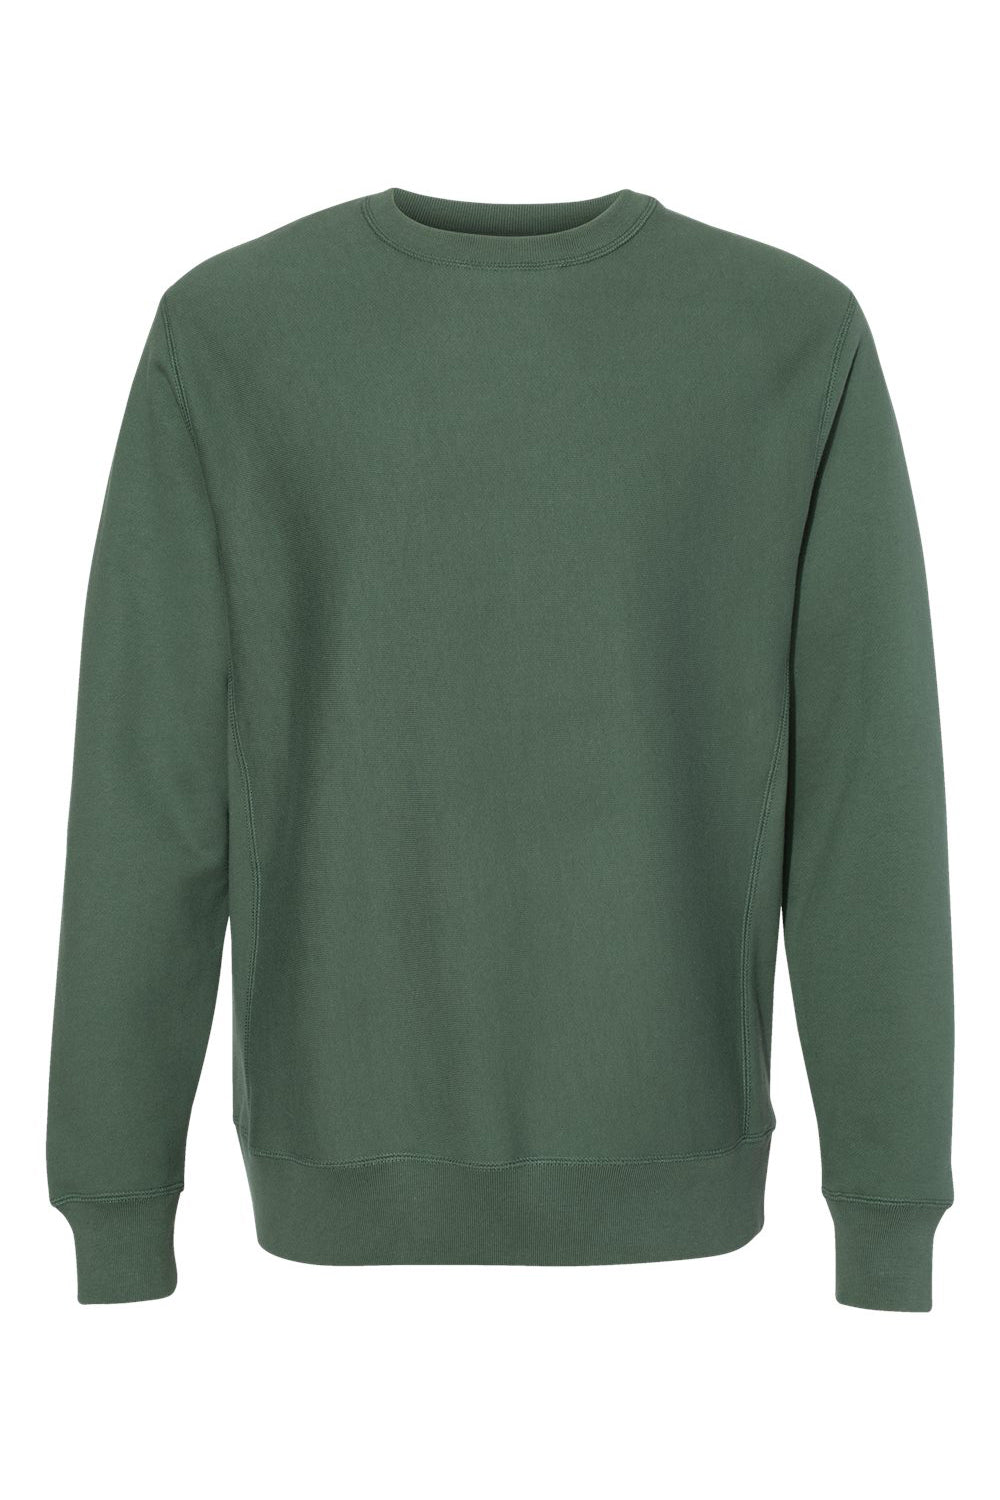 Independent Trading Co. IND5000C Mens Legend Crewneck Sweatshirt Alpine Green Flat Front